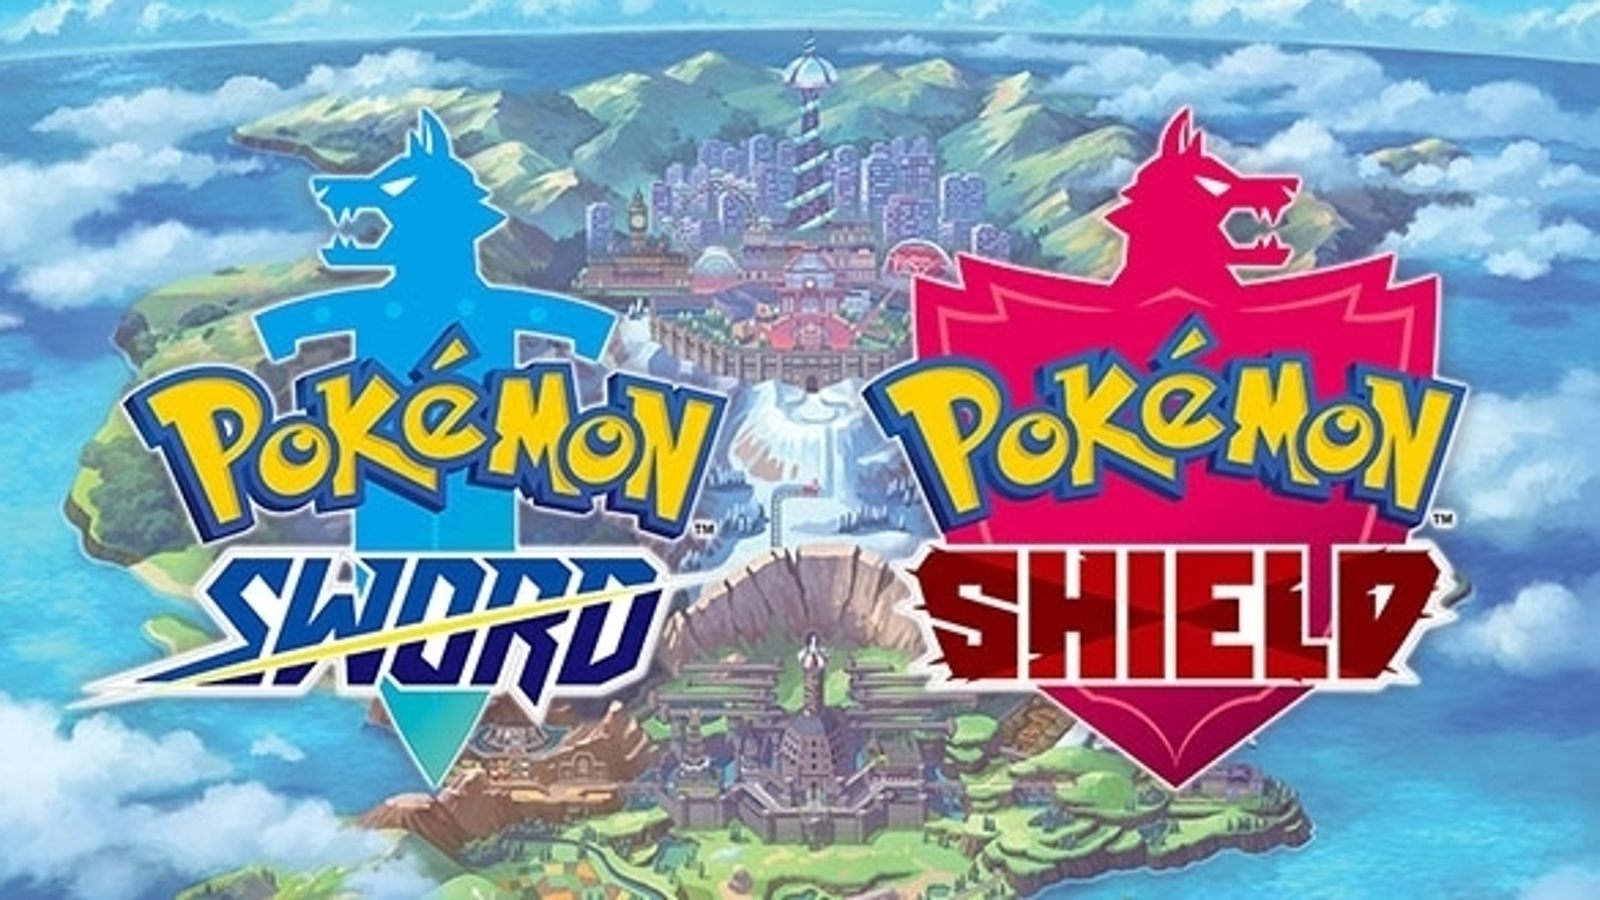 Pokémon Sword and Shield's full Pokédex seems to have leaked - Polygon